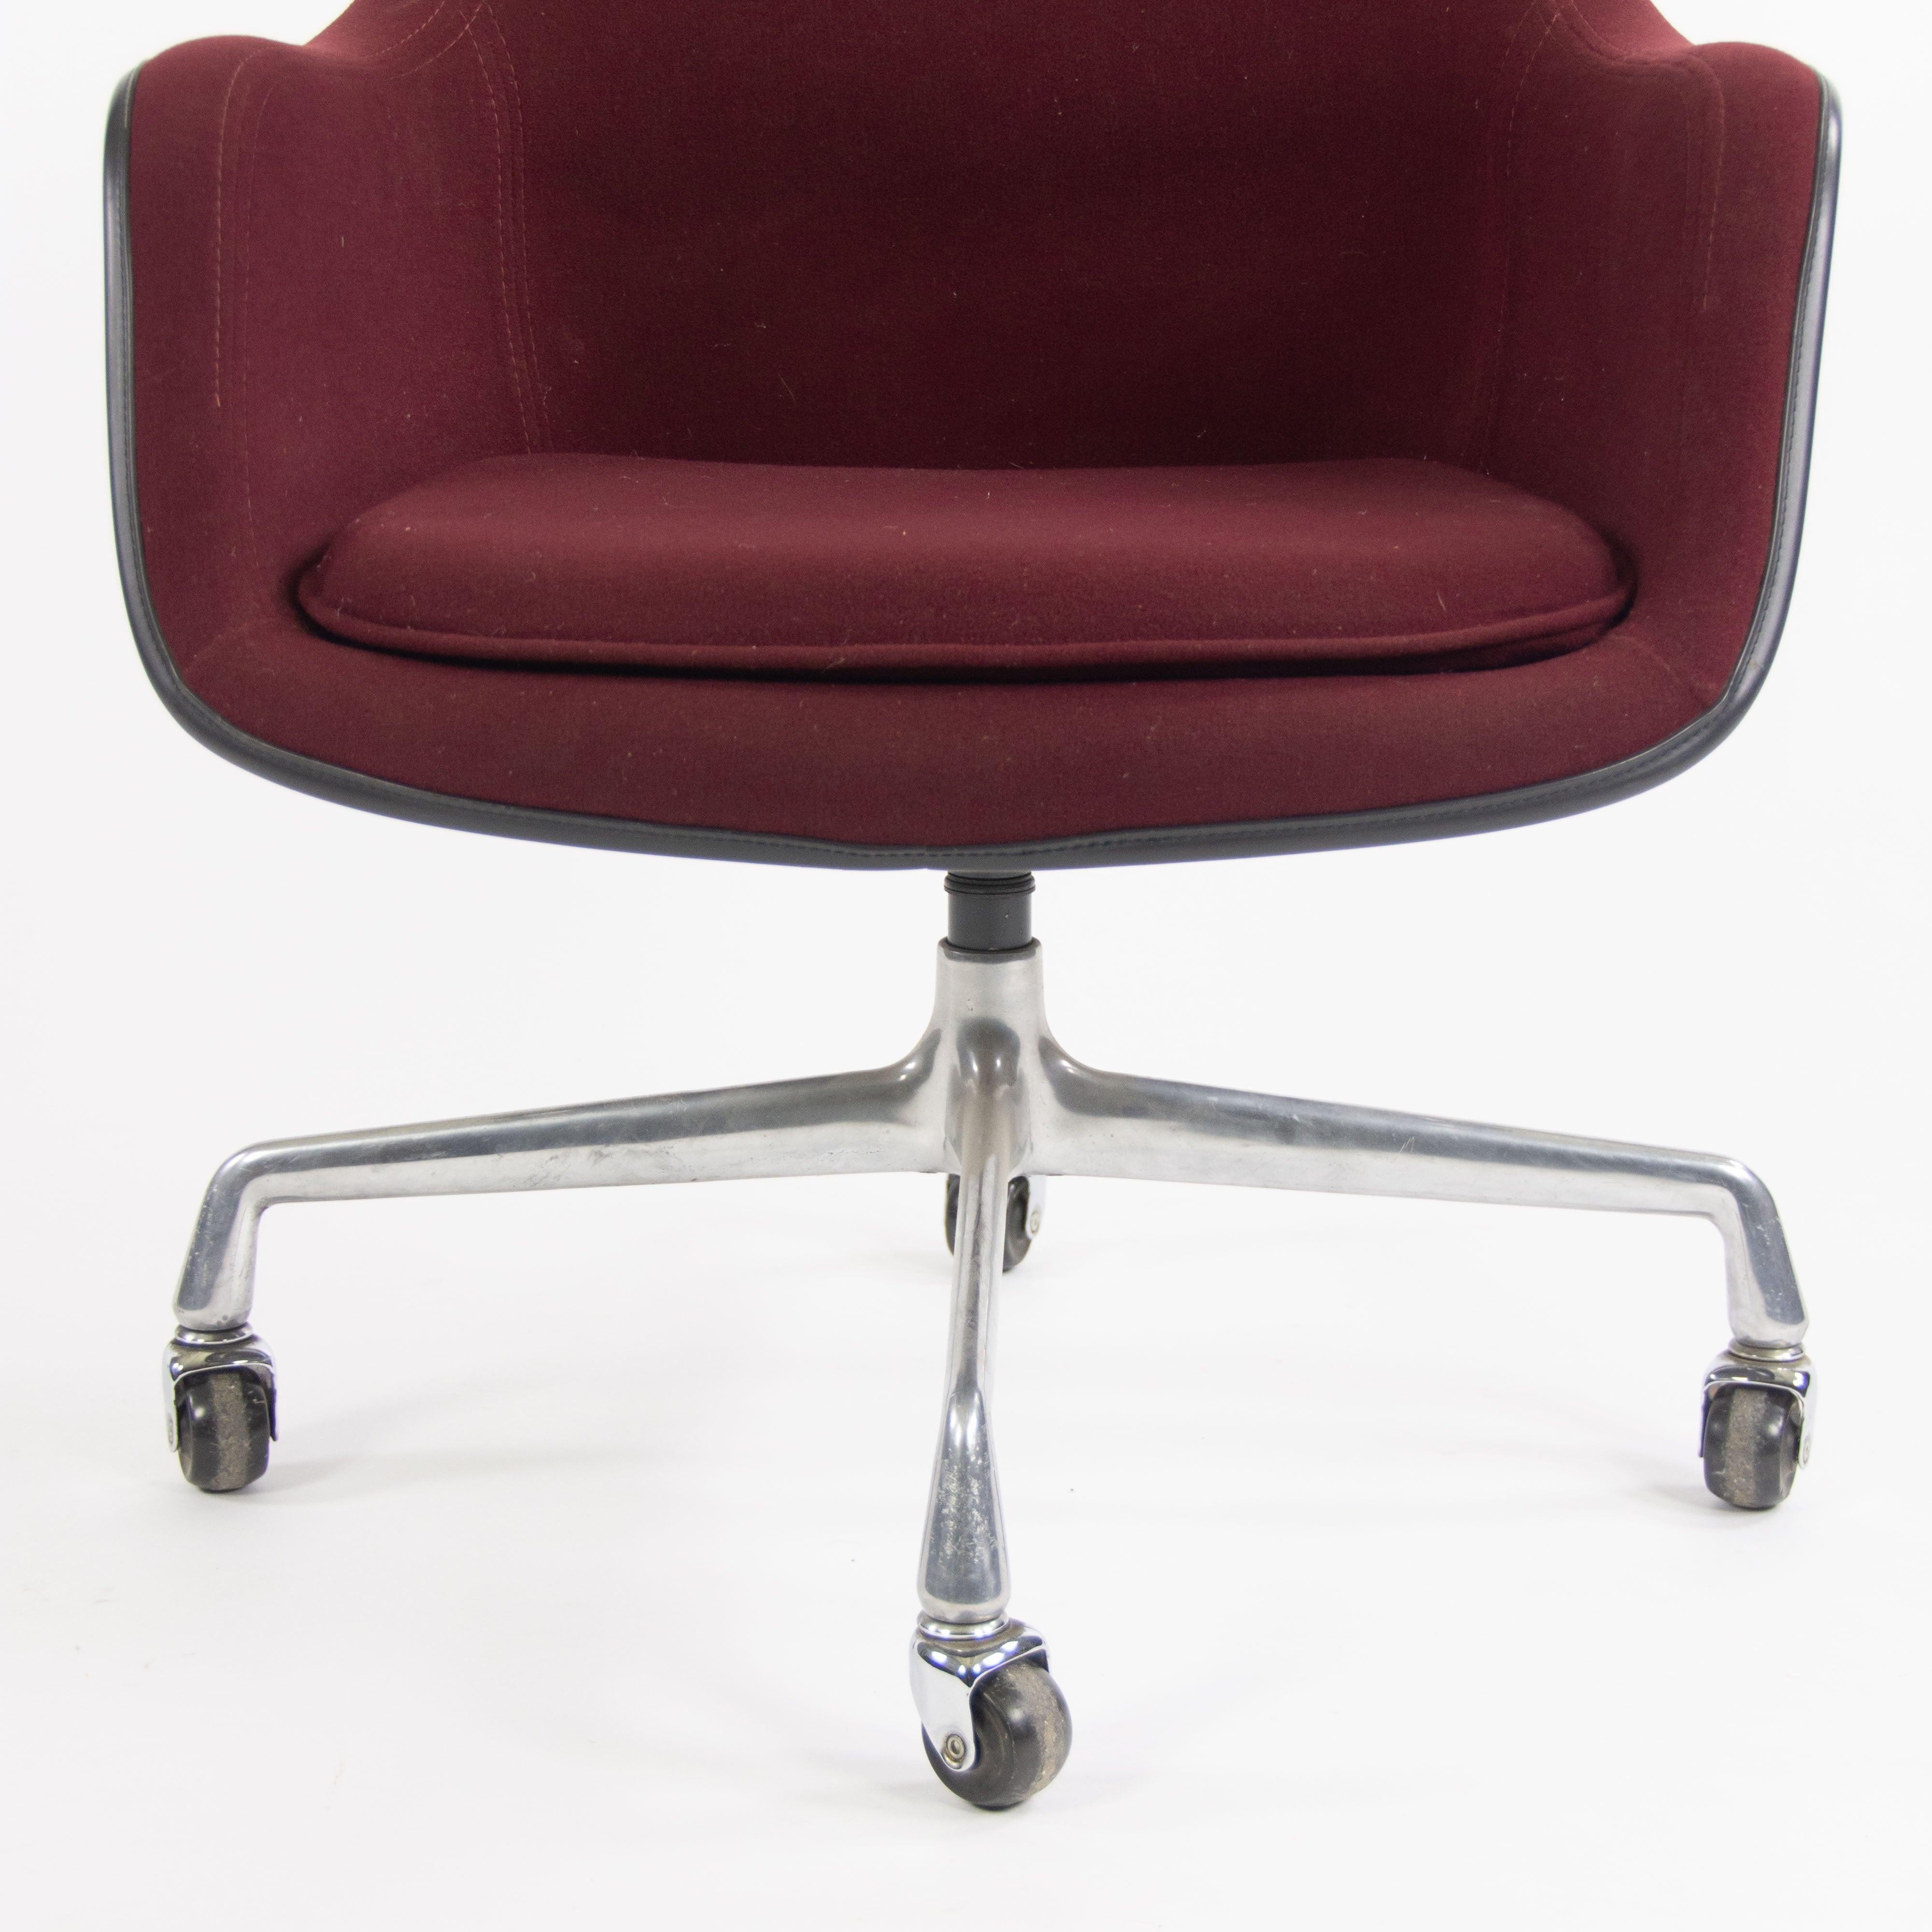 1985 Eames Herman Miller EC175 Upholstered Fiberglass Shell Chair Museum Quality For Sale 2